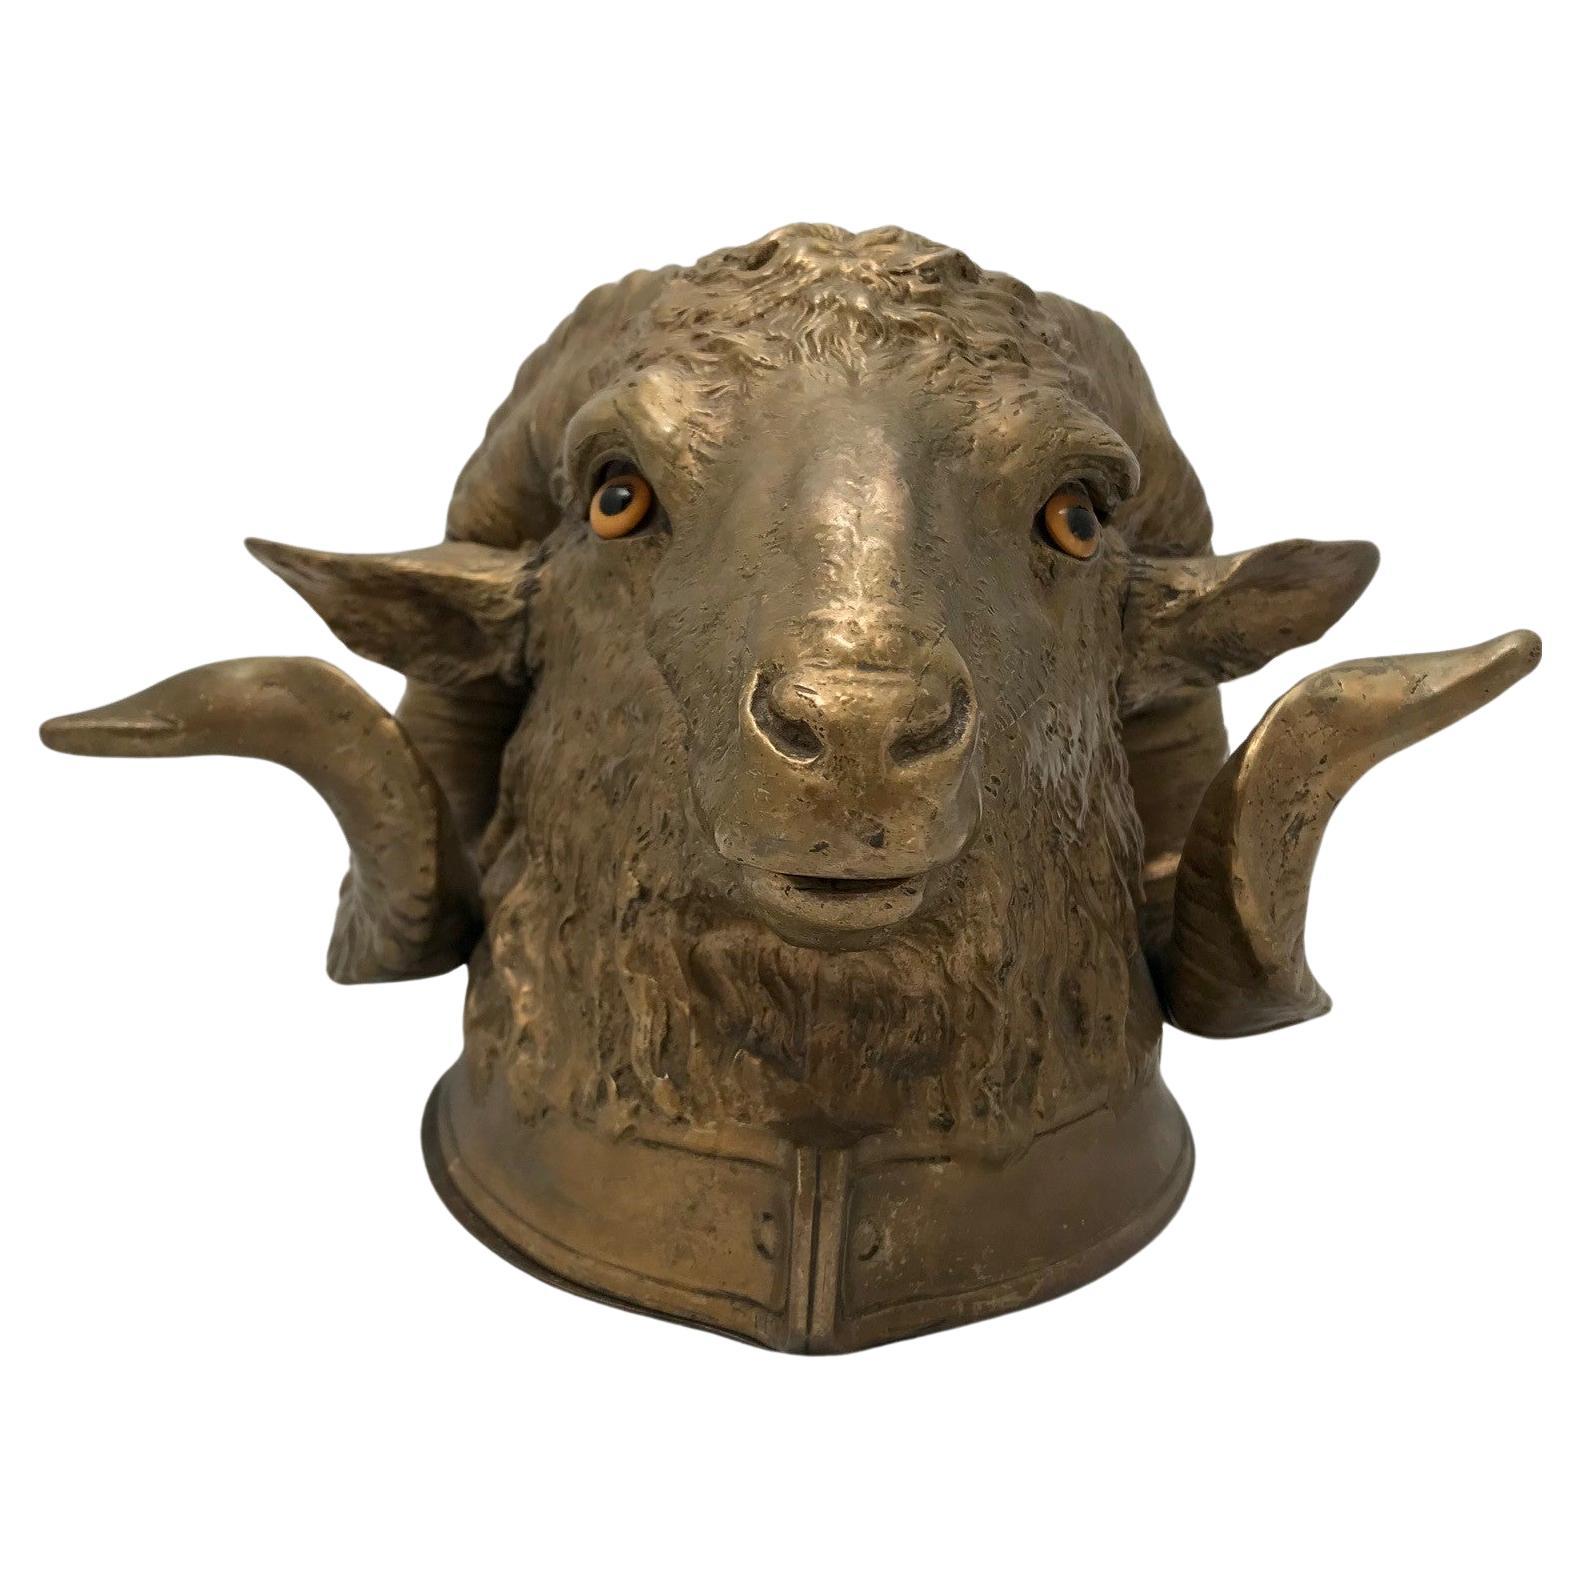 Bronze Inkwell Modelled as Ram's Head